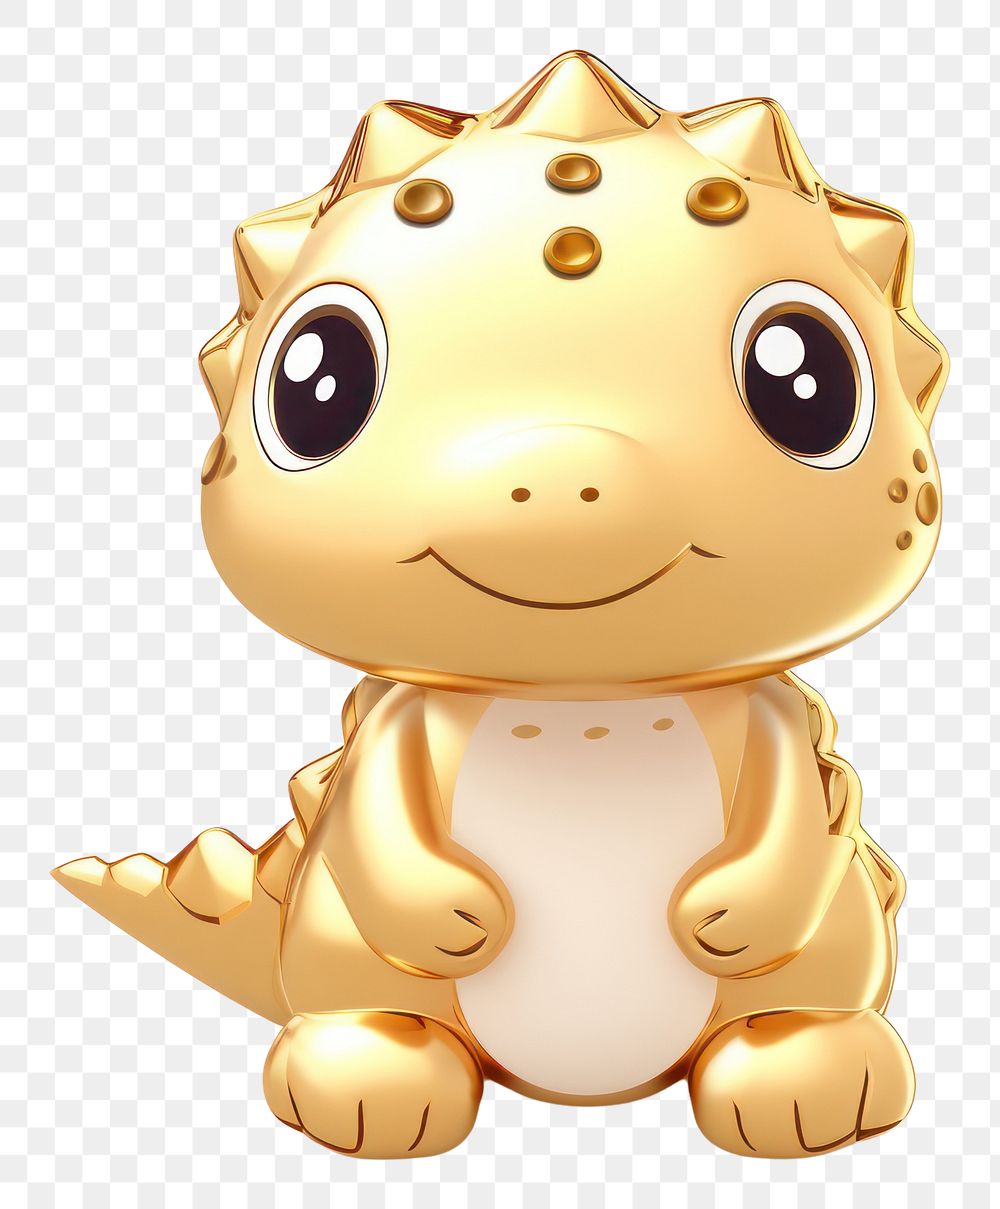 PNG Brooch of cute dinosaur figurine plush toy.